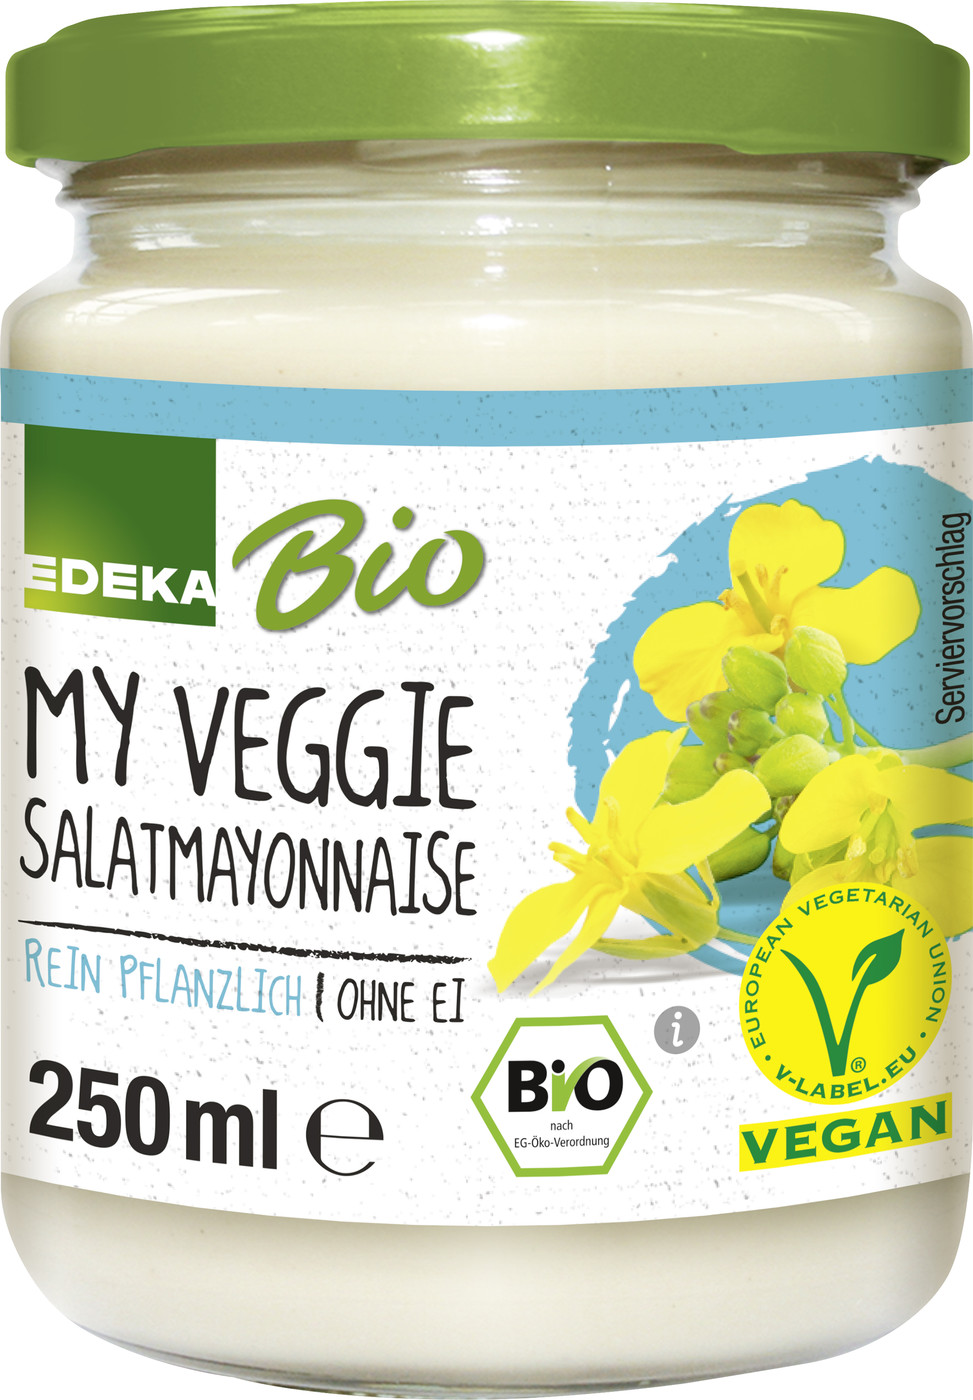 EDEKA Bio My Veggie Salatmayonnaise 250ML